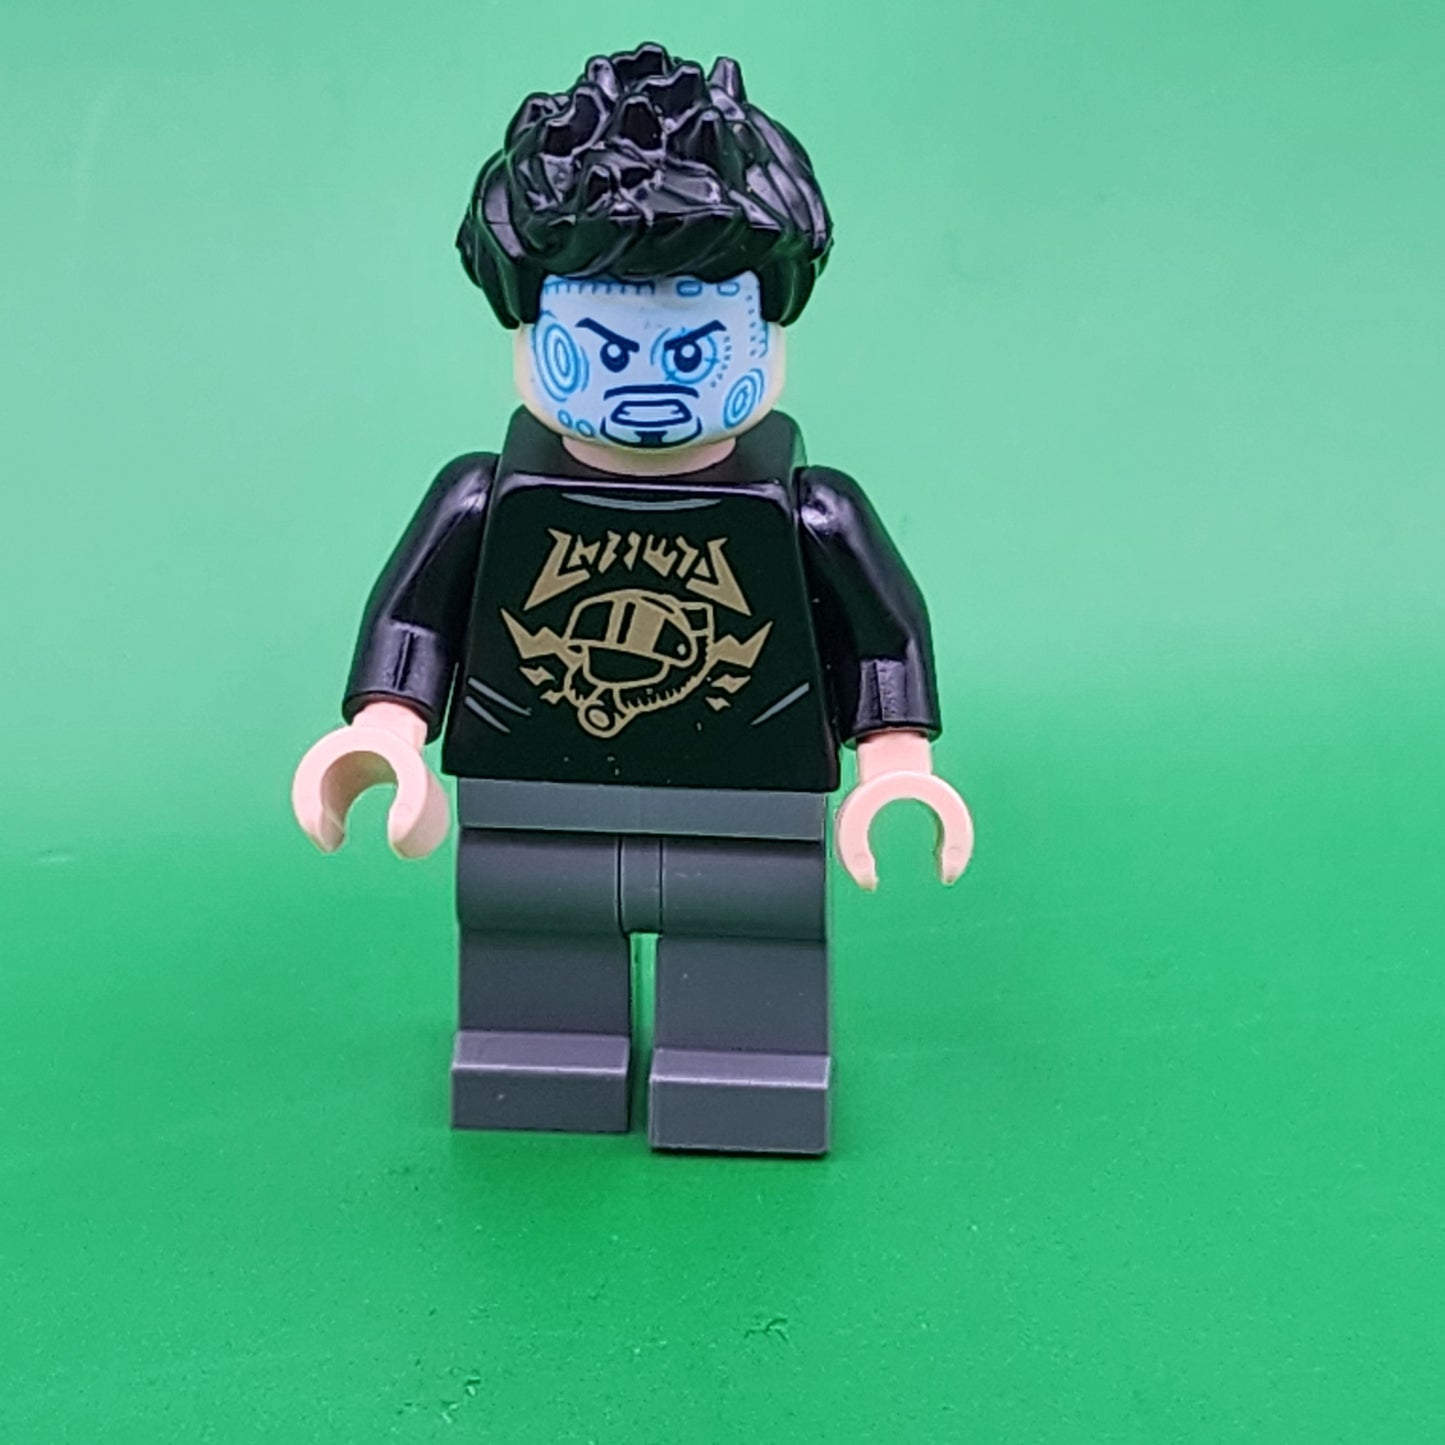 Lego Tony Stark Minifigure sh747 Super Heroes Black Shirt